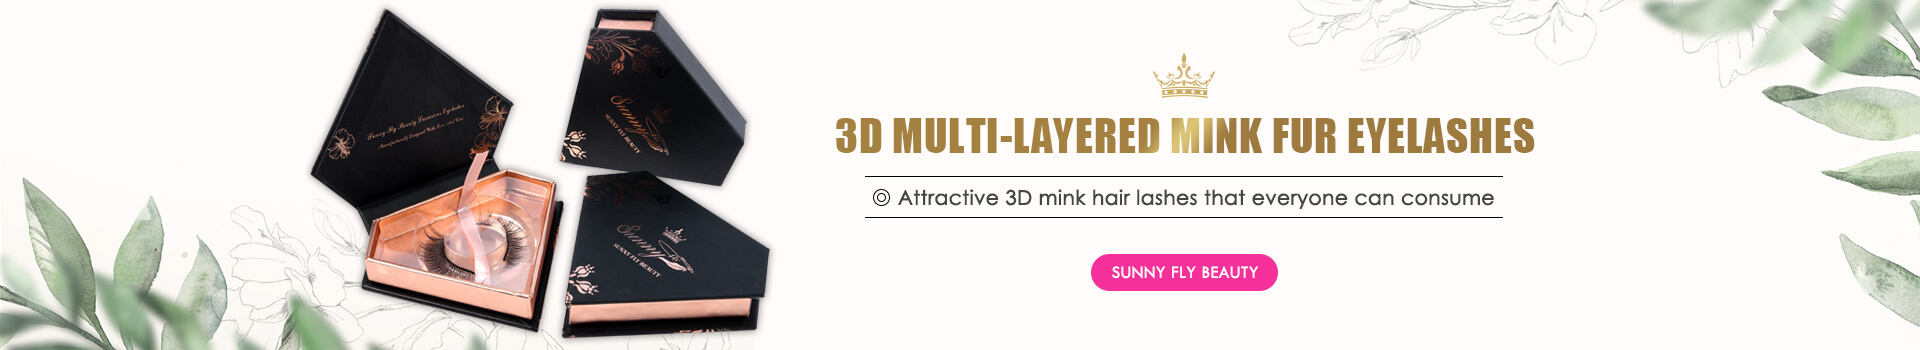 3D Multi-layered Mink Fur Eyelashes MG20